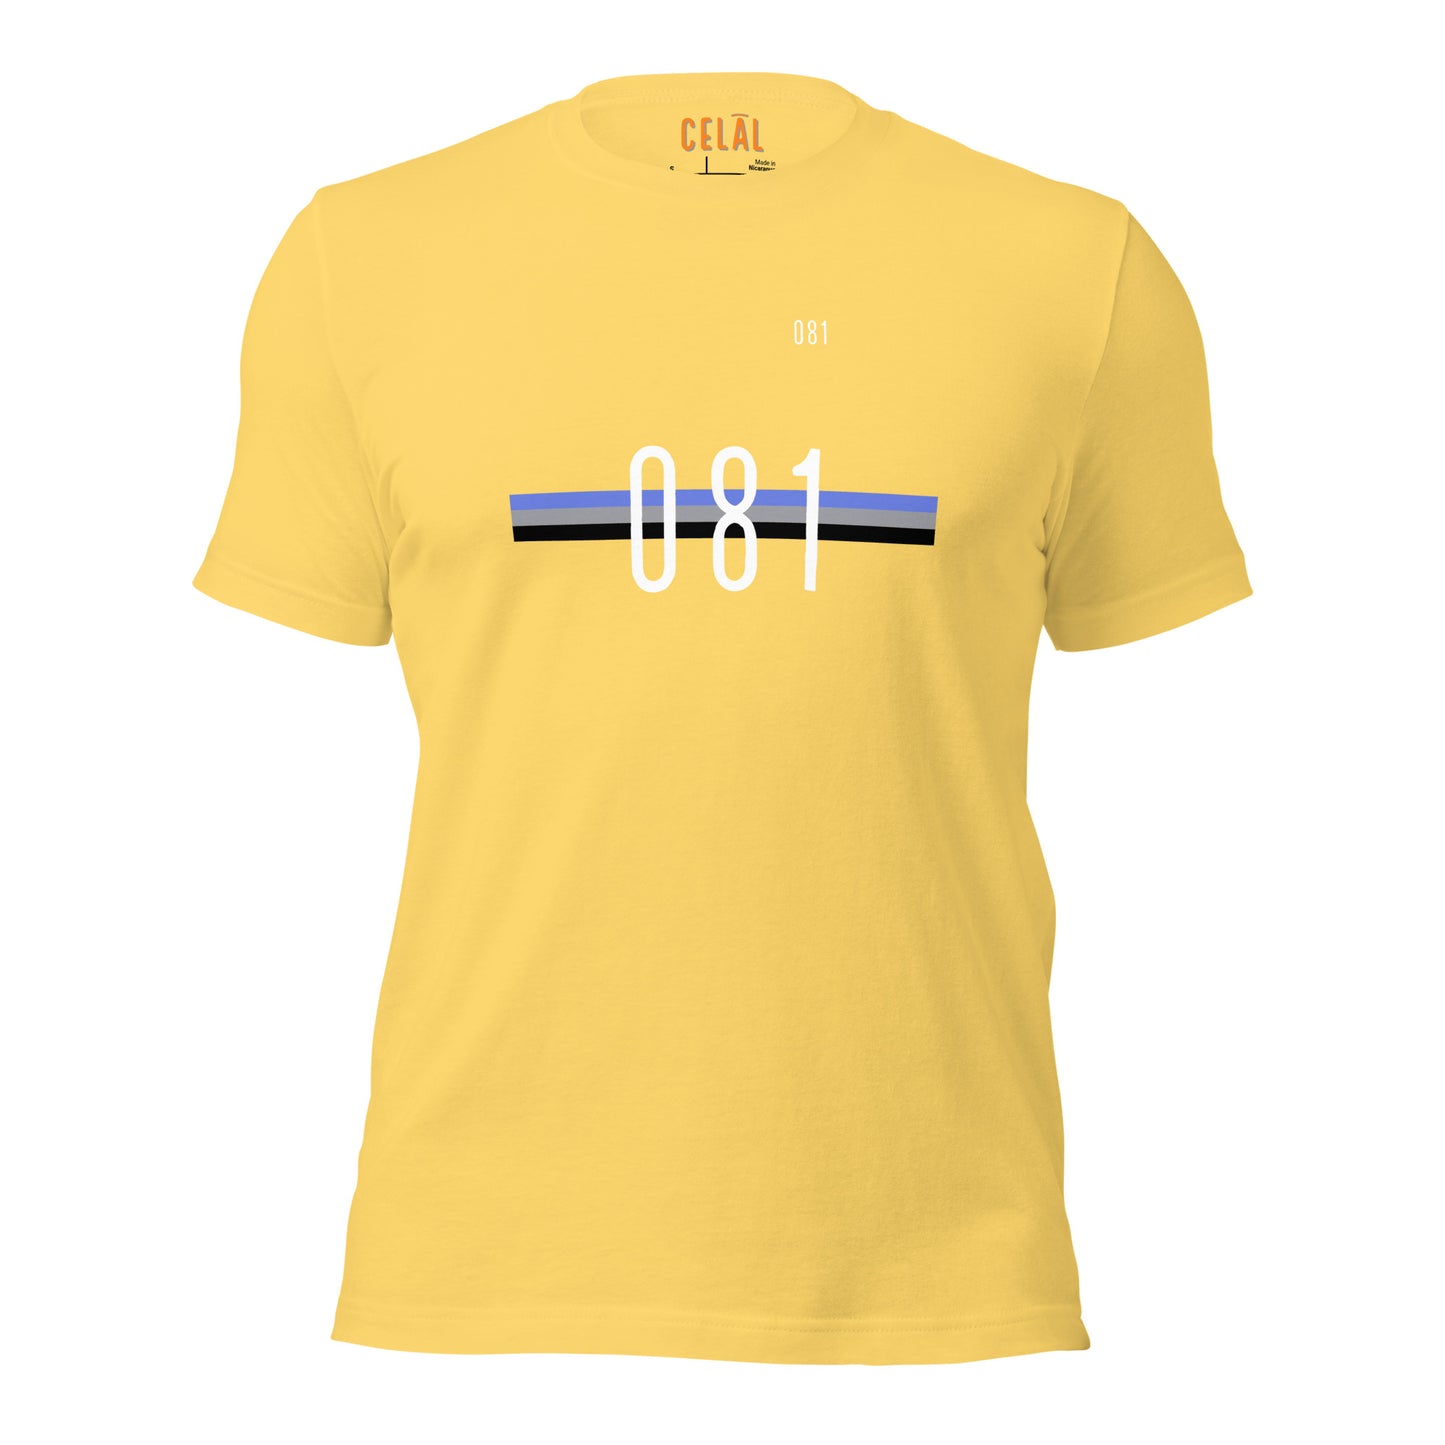 081 Unisex t-shirt